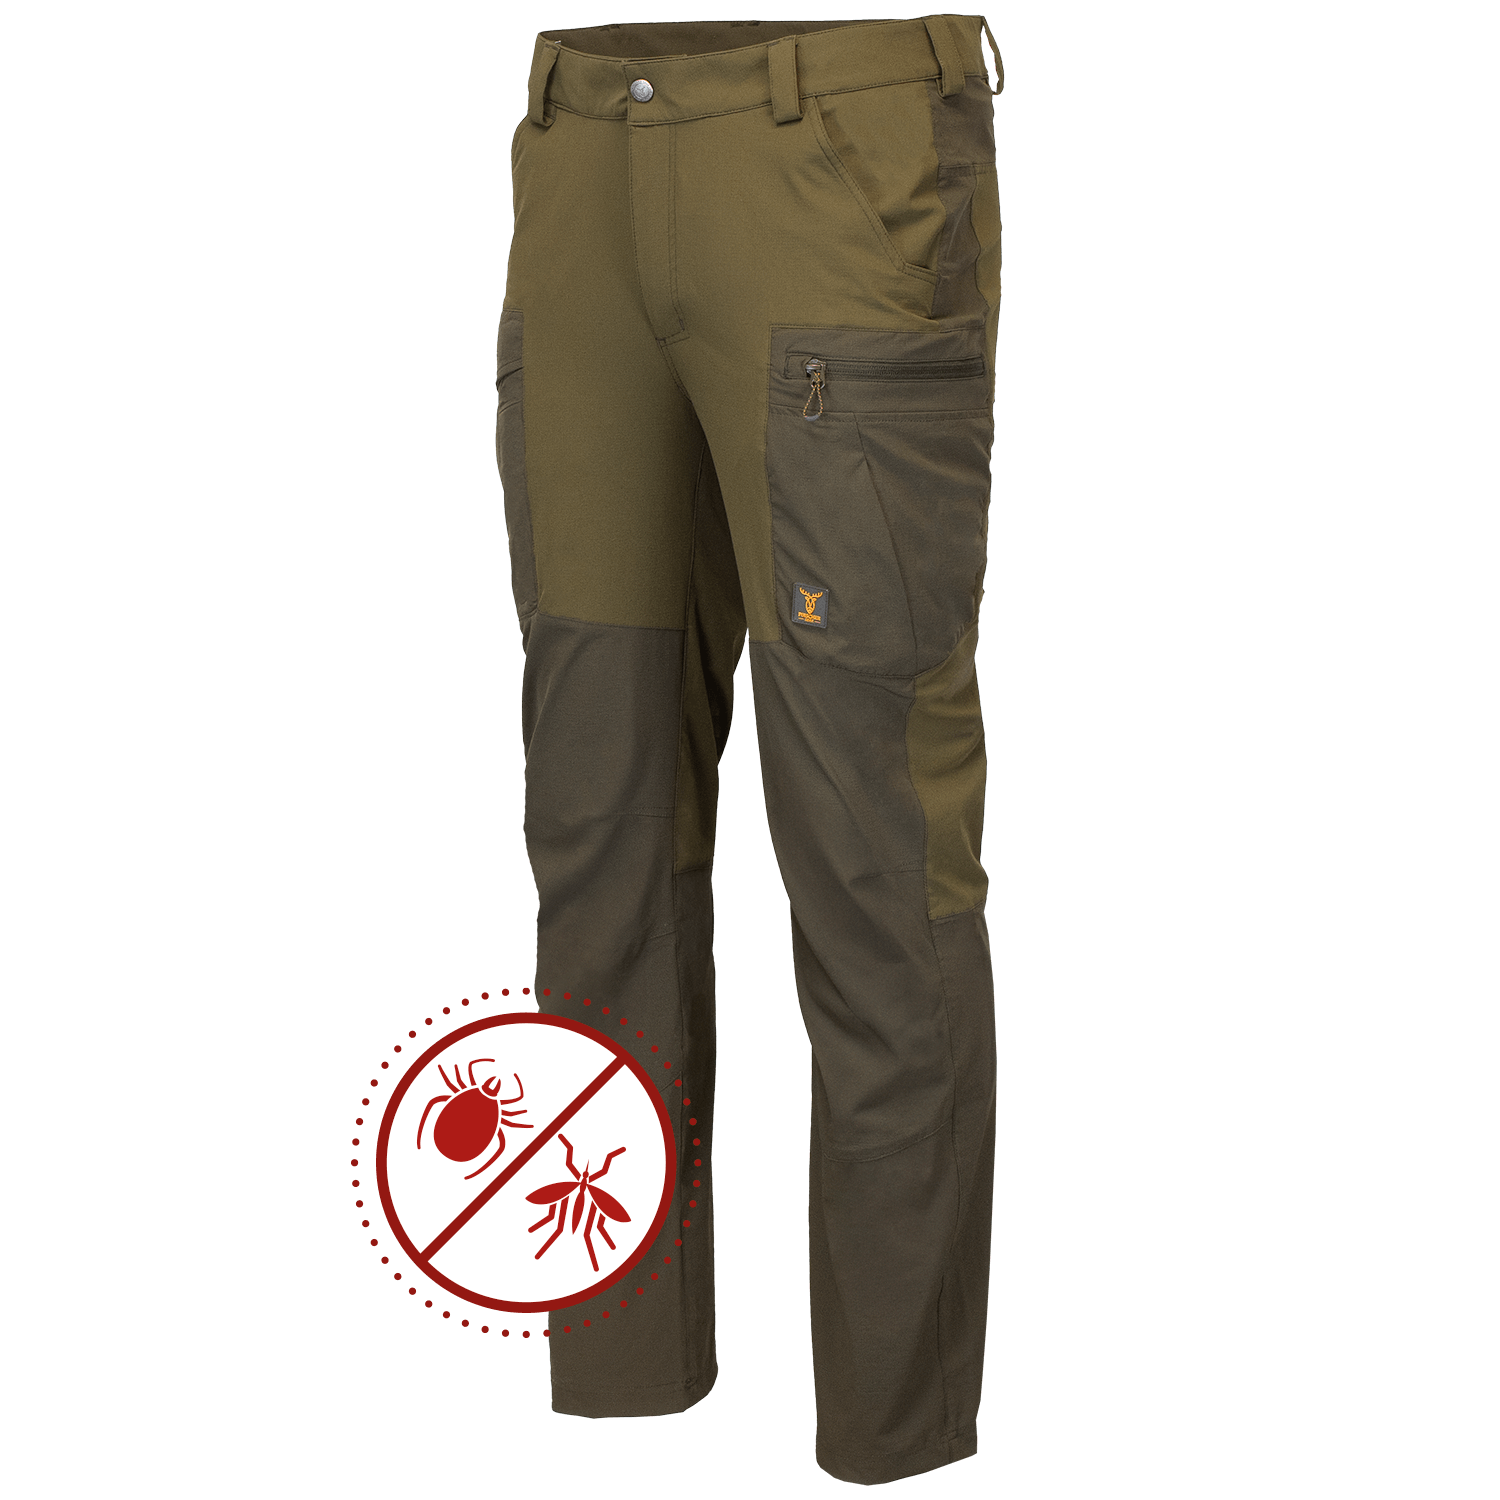 Pirscher Gear Ripstop Tanatex Pants - Men's Hunting Clothing